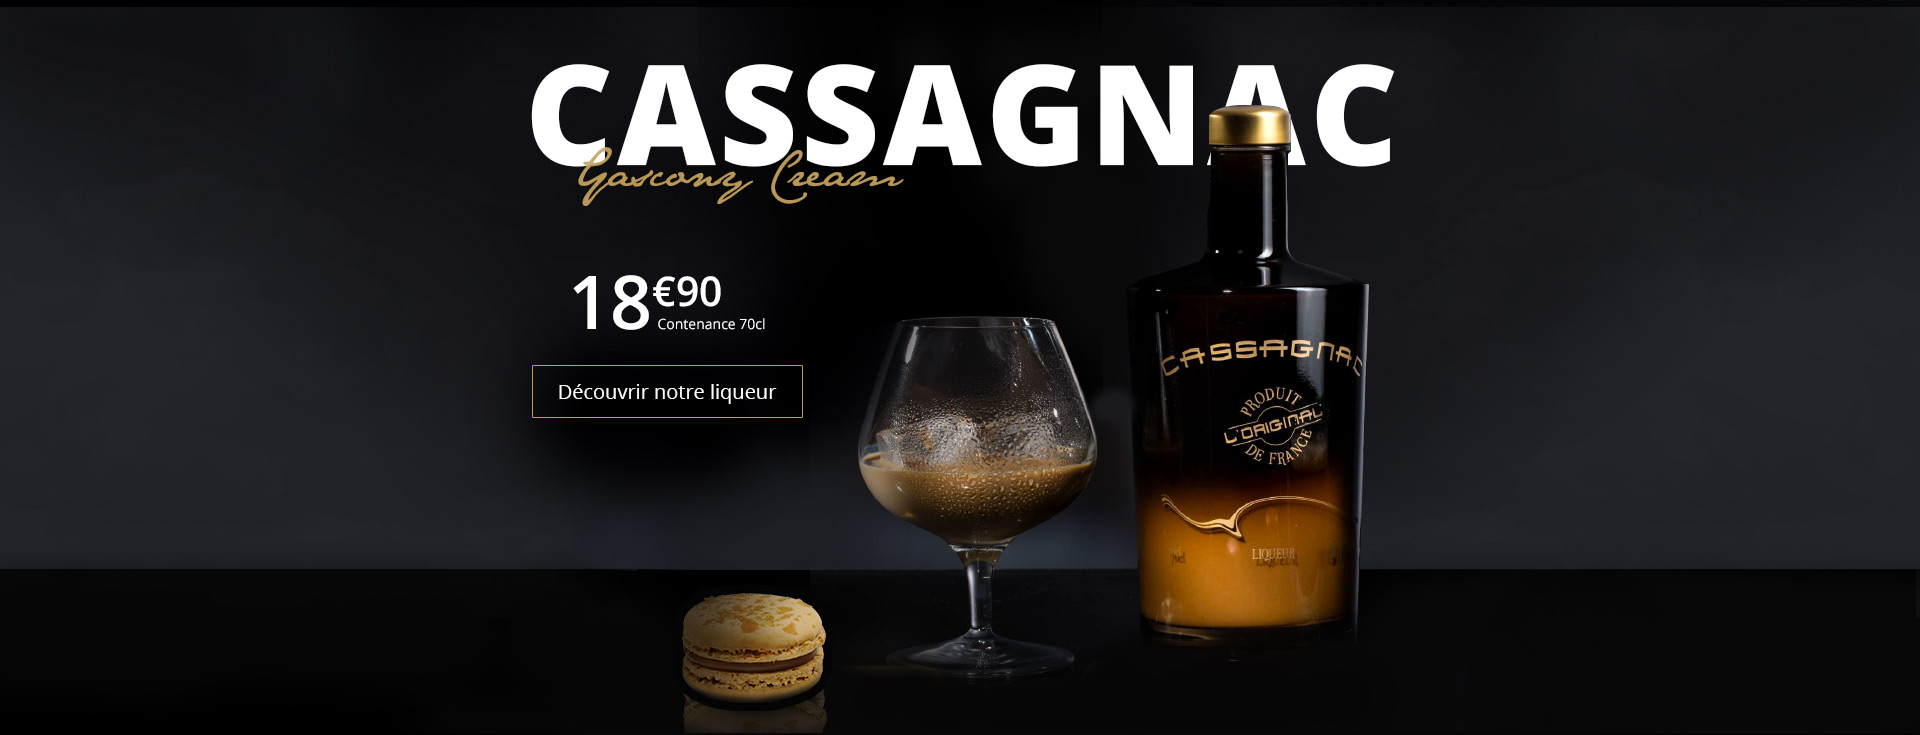 Cassagnac, Gascony Cream